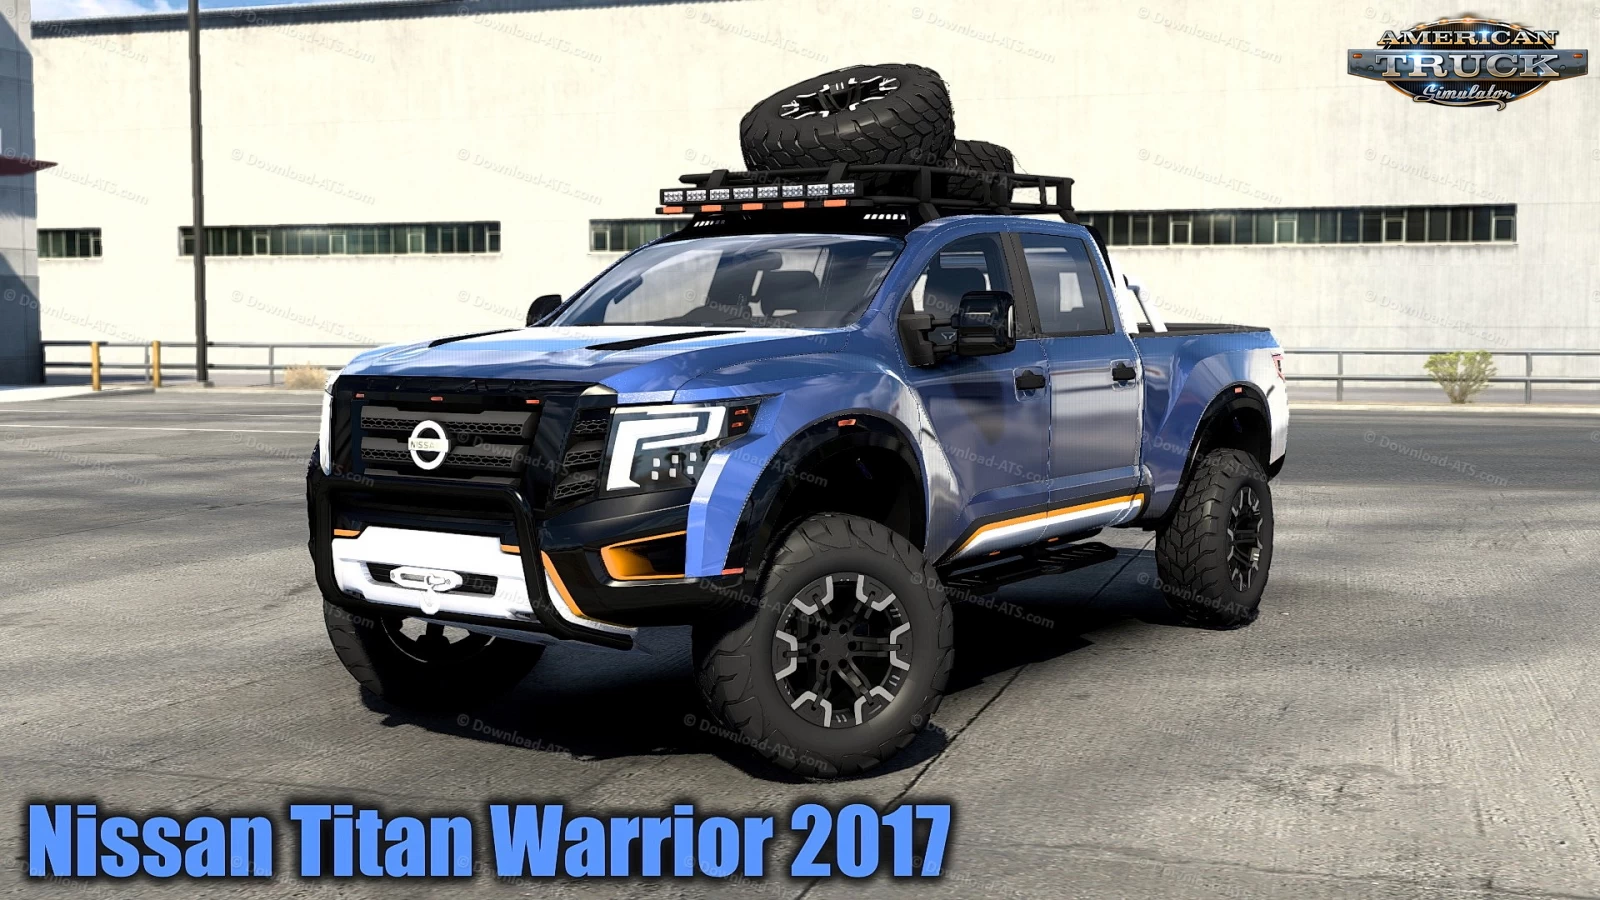 Nissan Titan Warrior 2017 + Interior v1.4 (1.46.x) for ATS